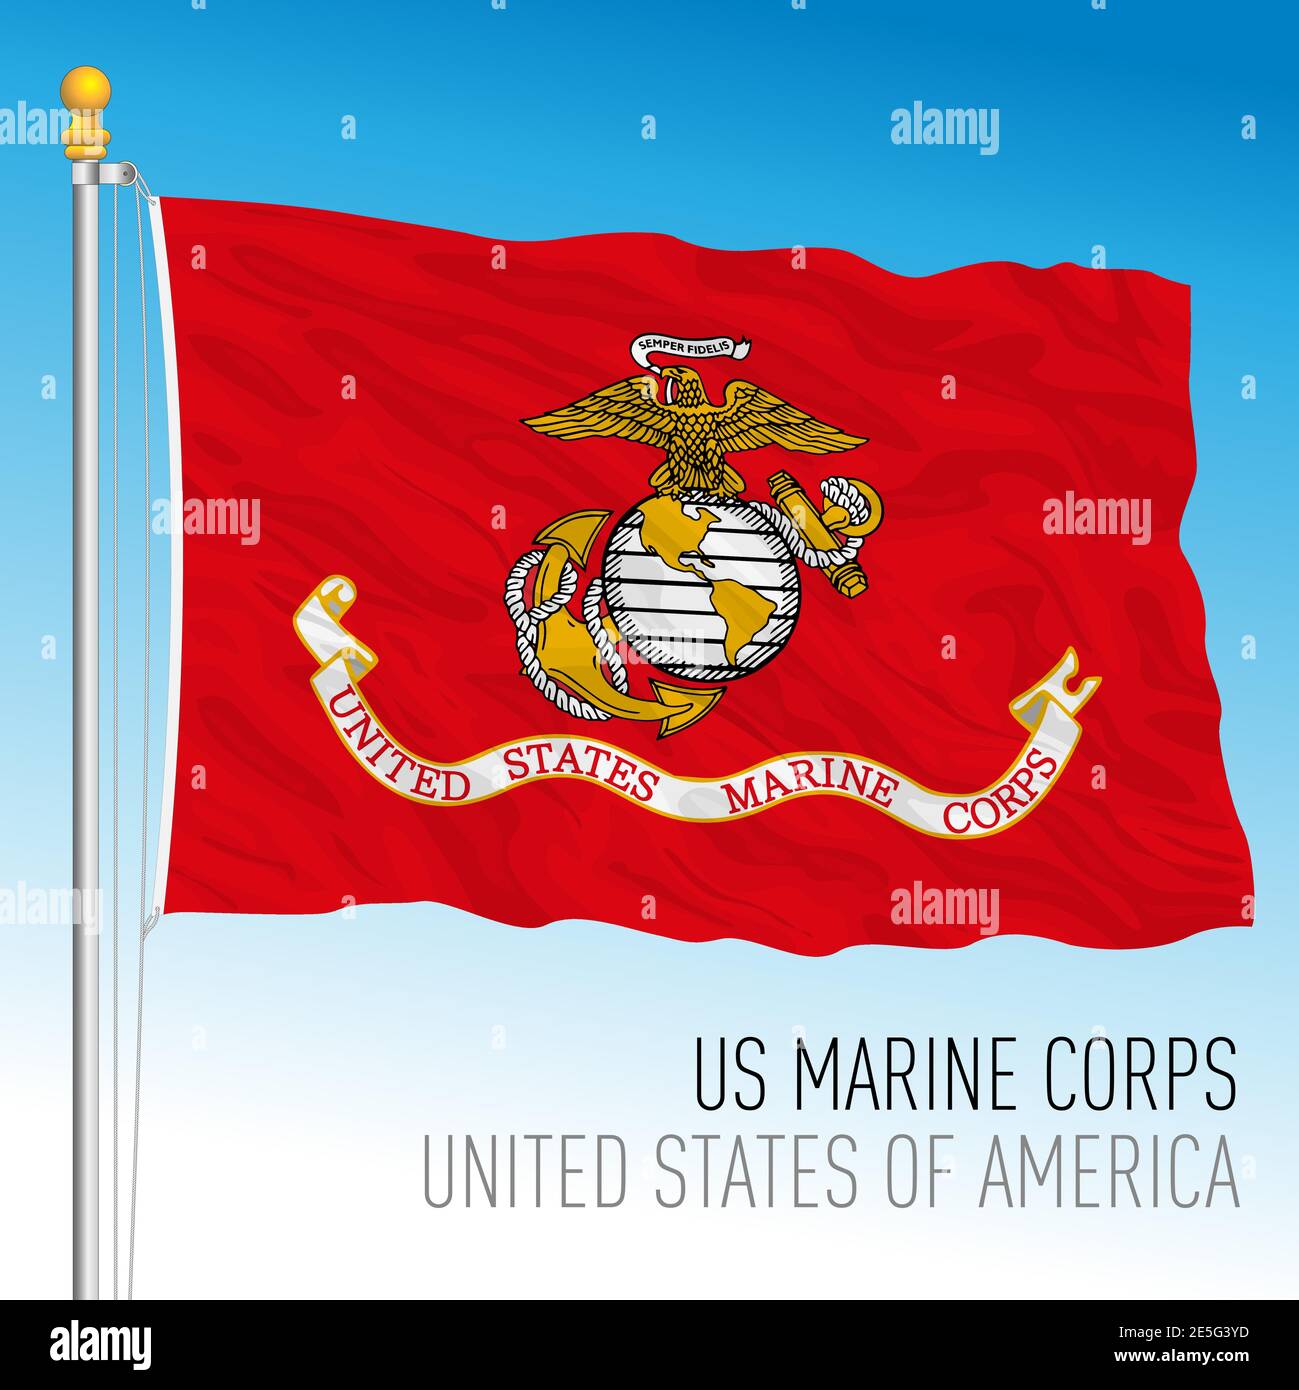 US Marine Corps flag, United States, vector illustration Stock Vector